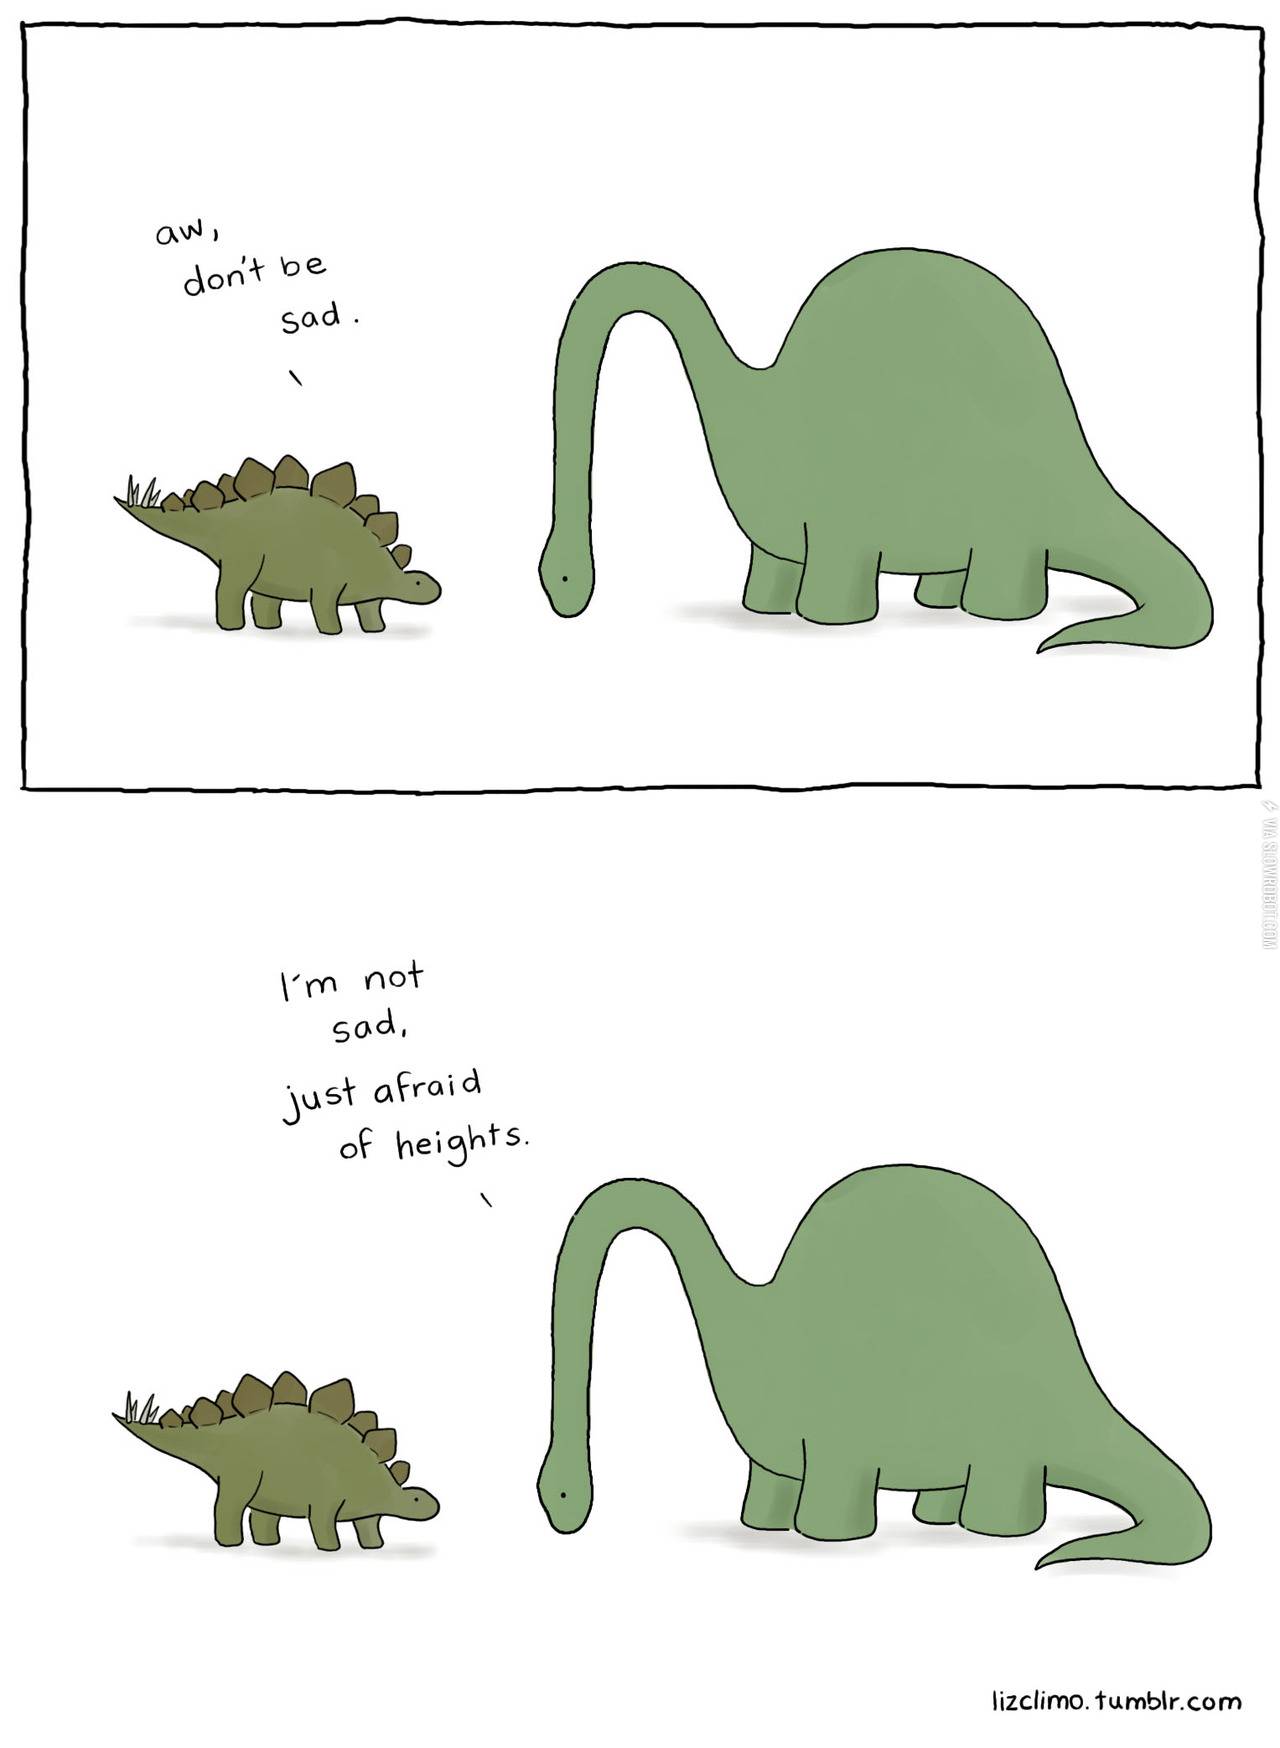 Brontosaurus+world+problems.